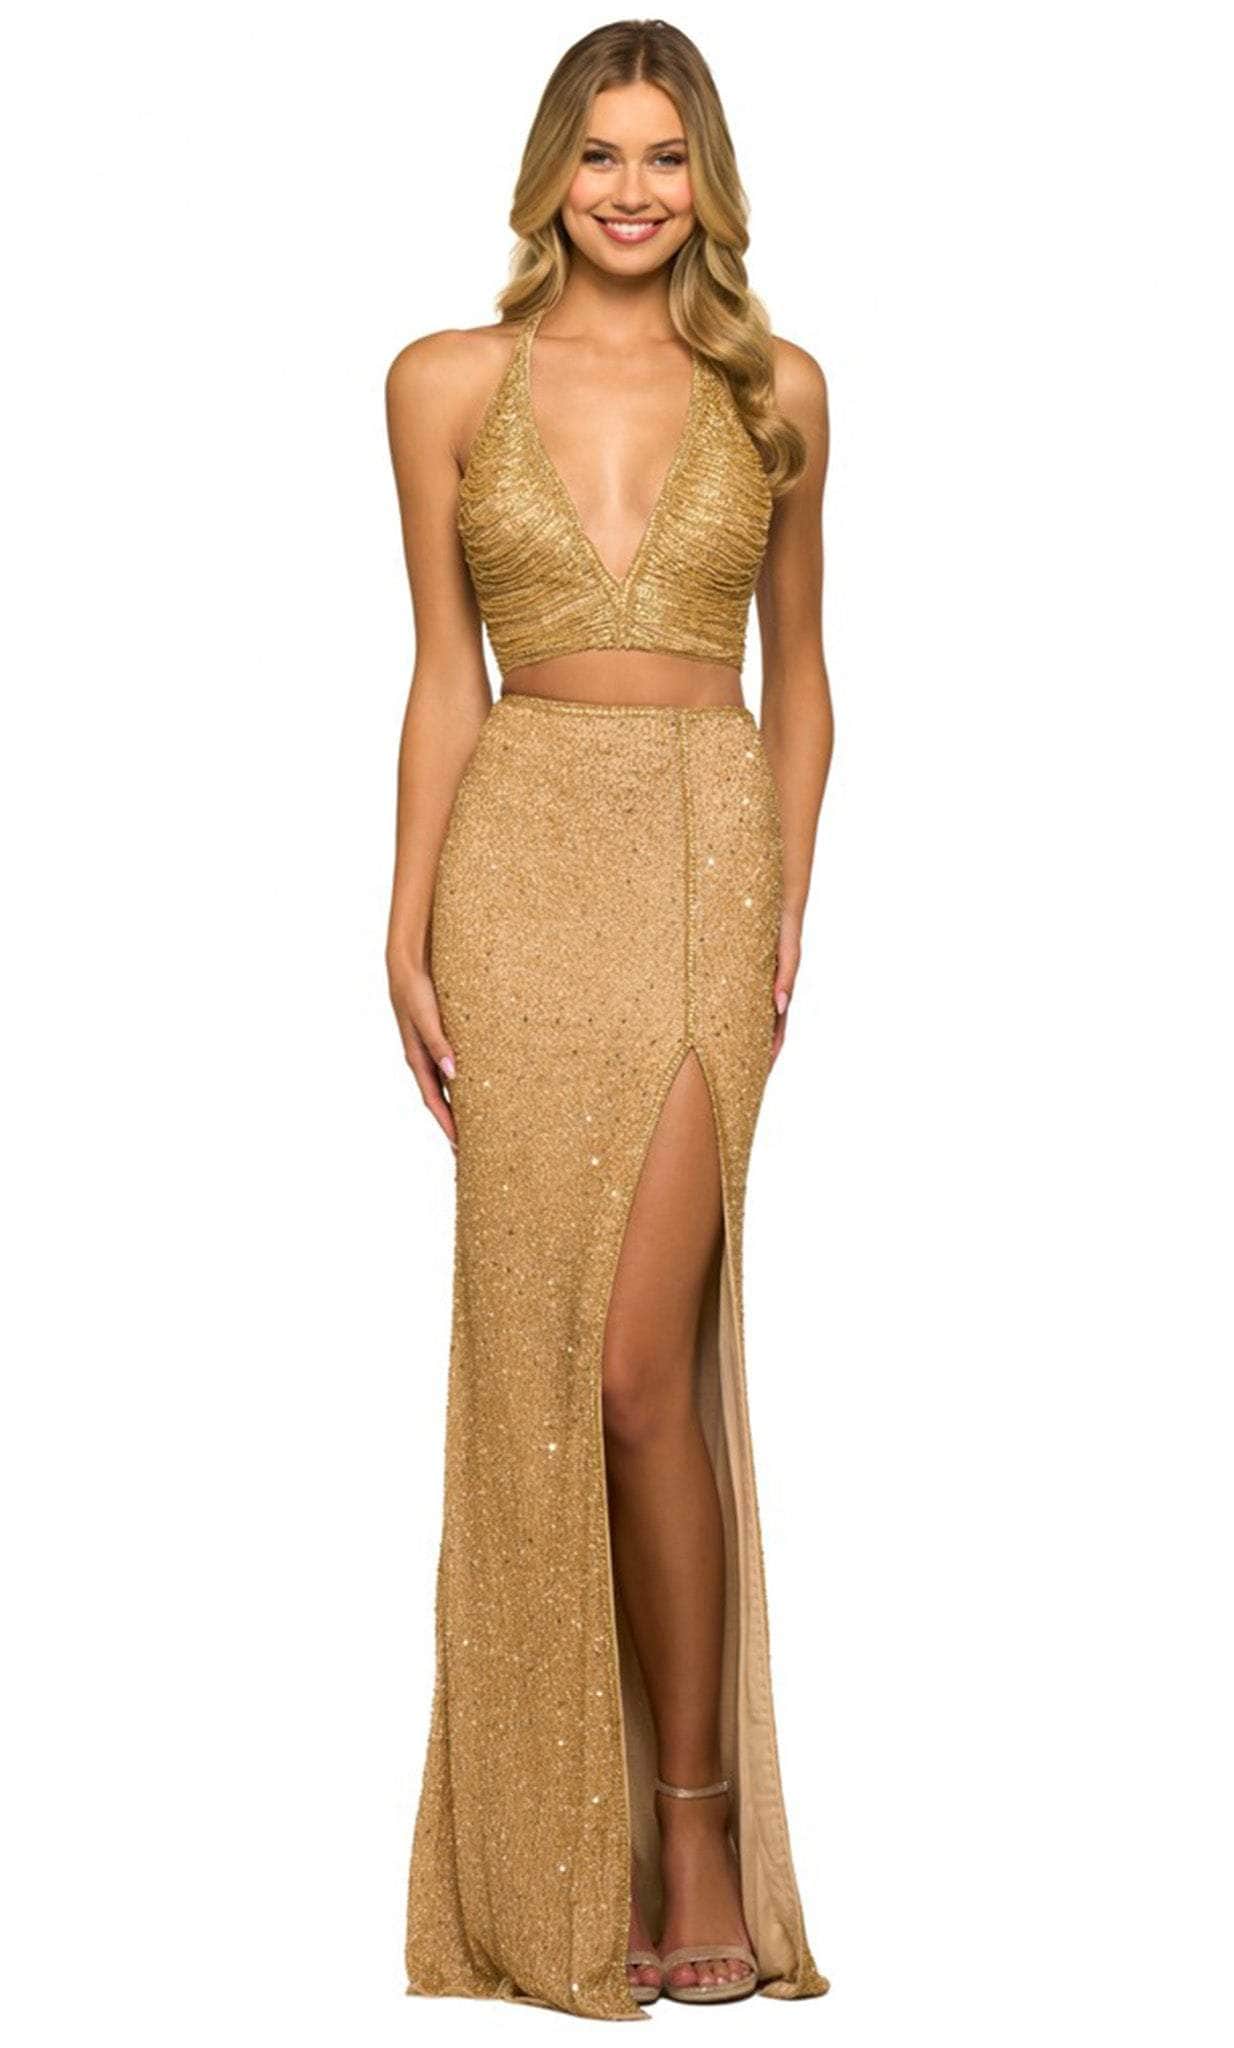 Sherri Hill 55442 - Sleeveless Beaded Evening Dress Evening Dresses 000 / Gold